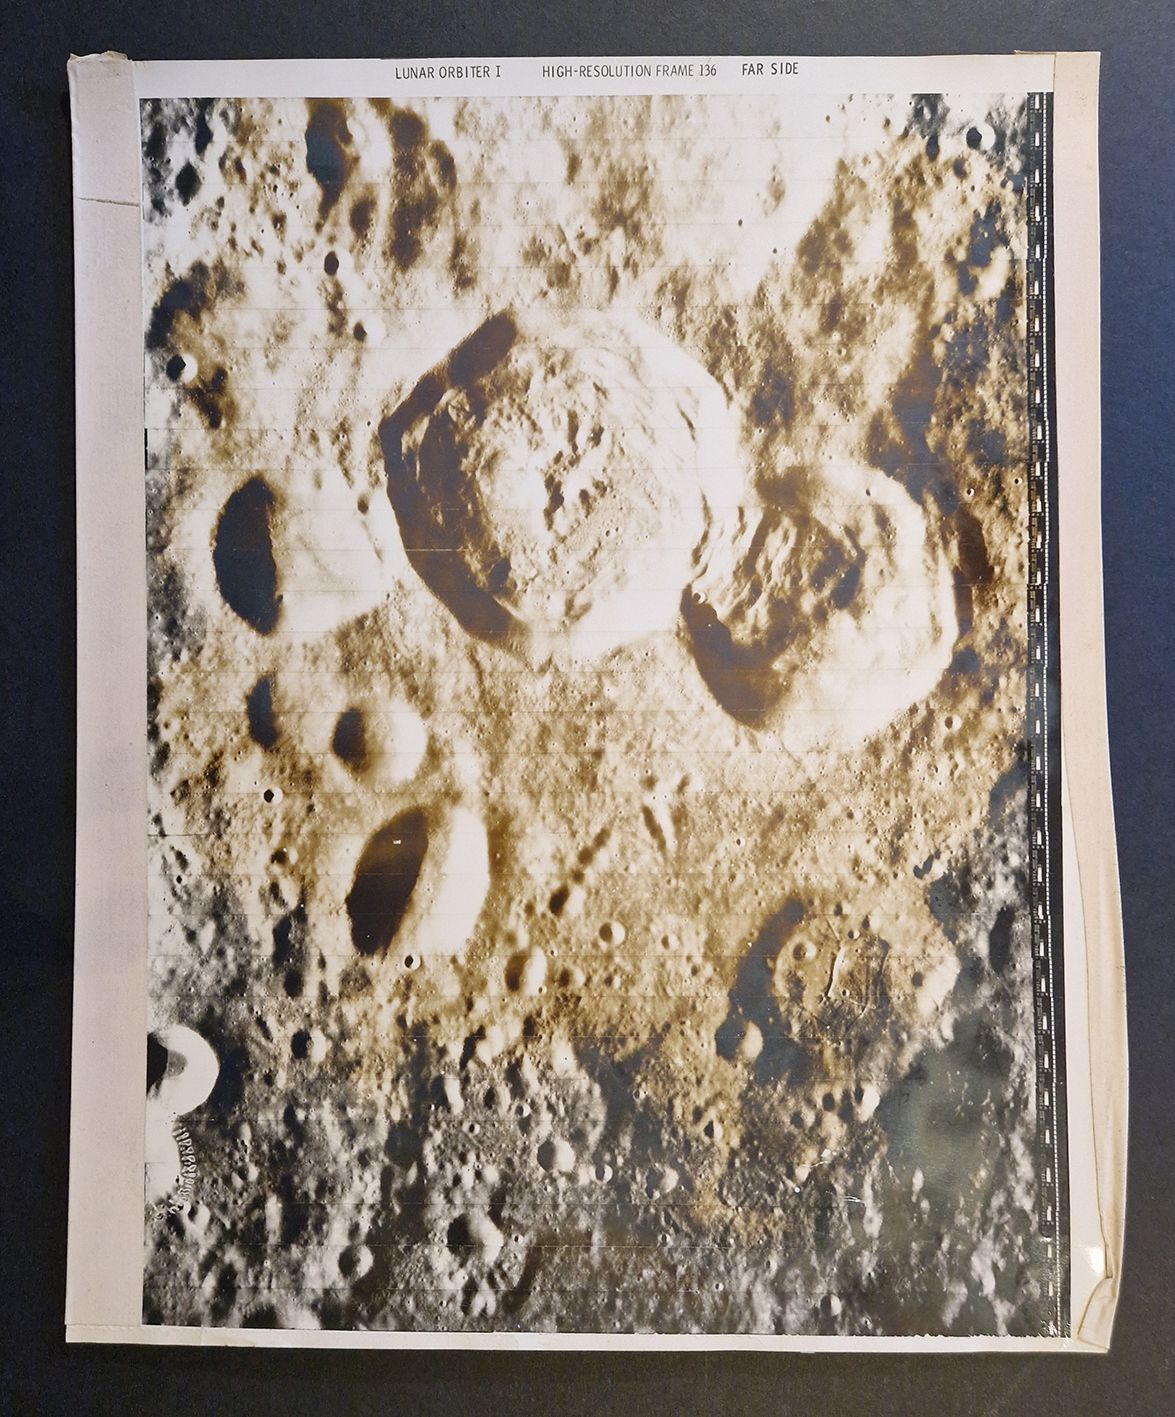 Null (美国国家航空航天局。稀有。大格式。月球轨道器1号) "高分辨率画面136，远侧"。 月球的远侧。大约在1966年。月球轨道器 "任务的目的是对月球表&hellip;